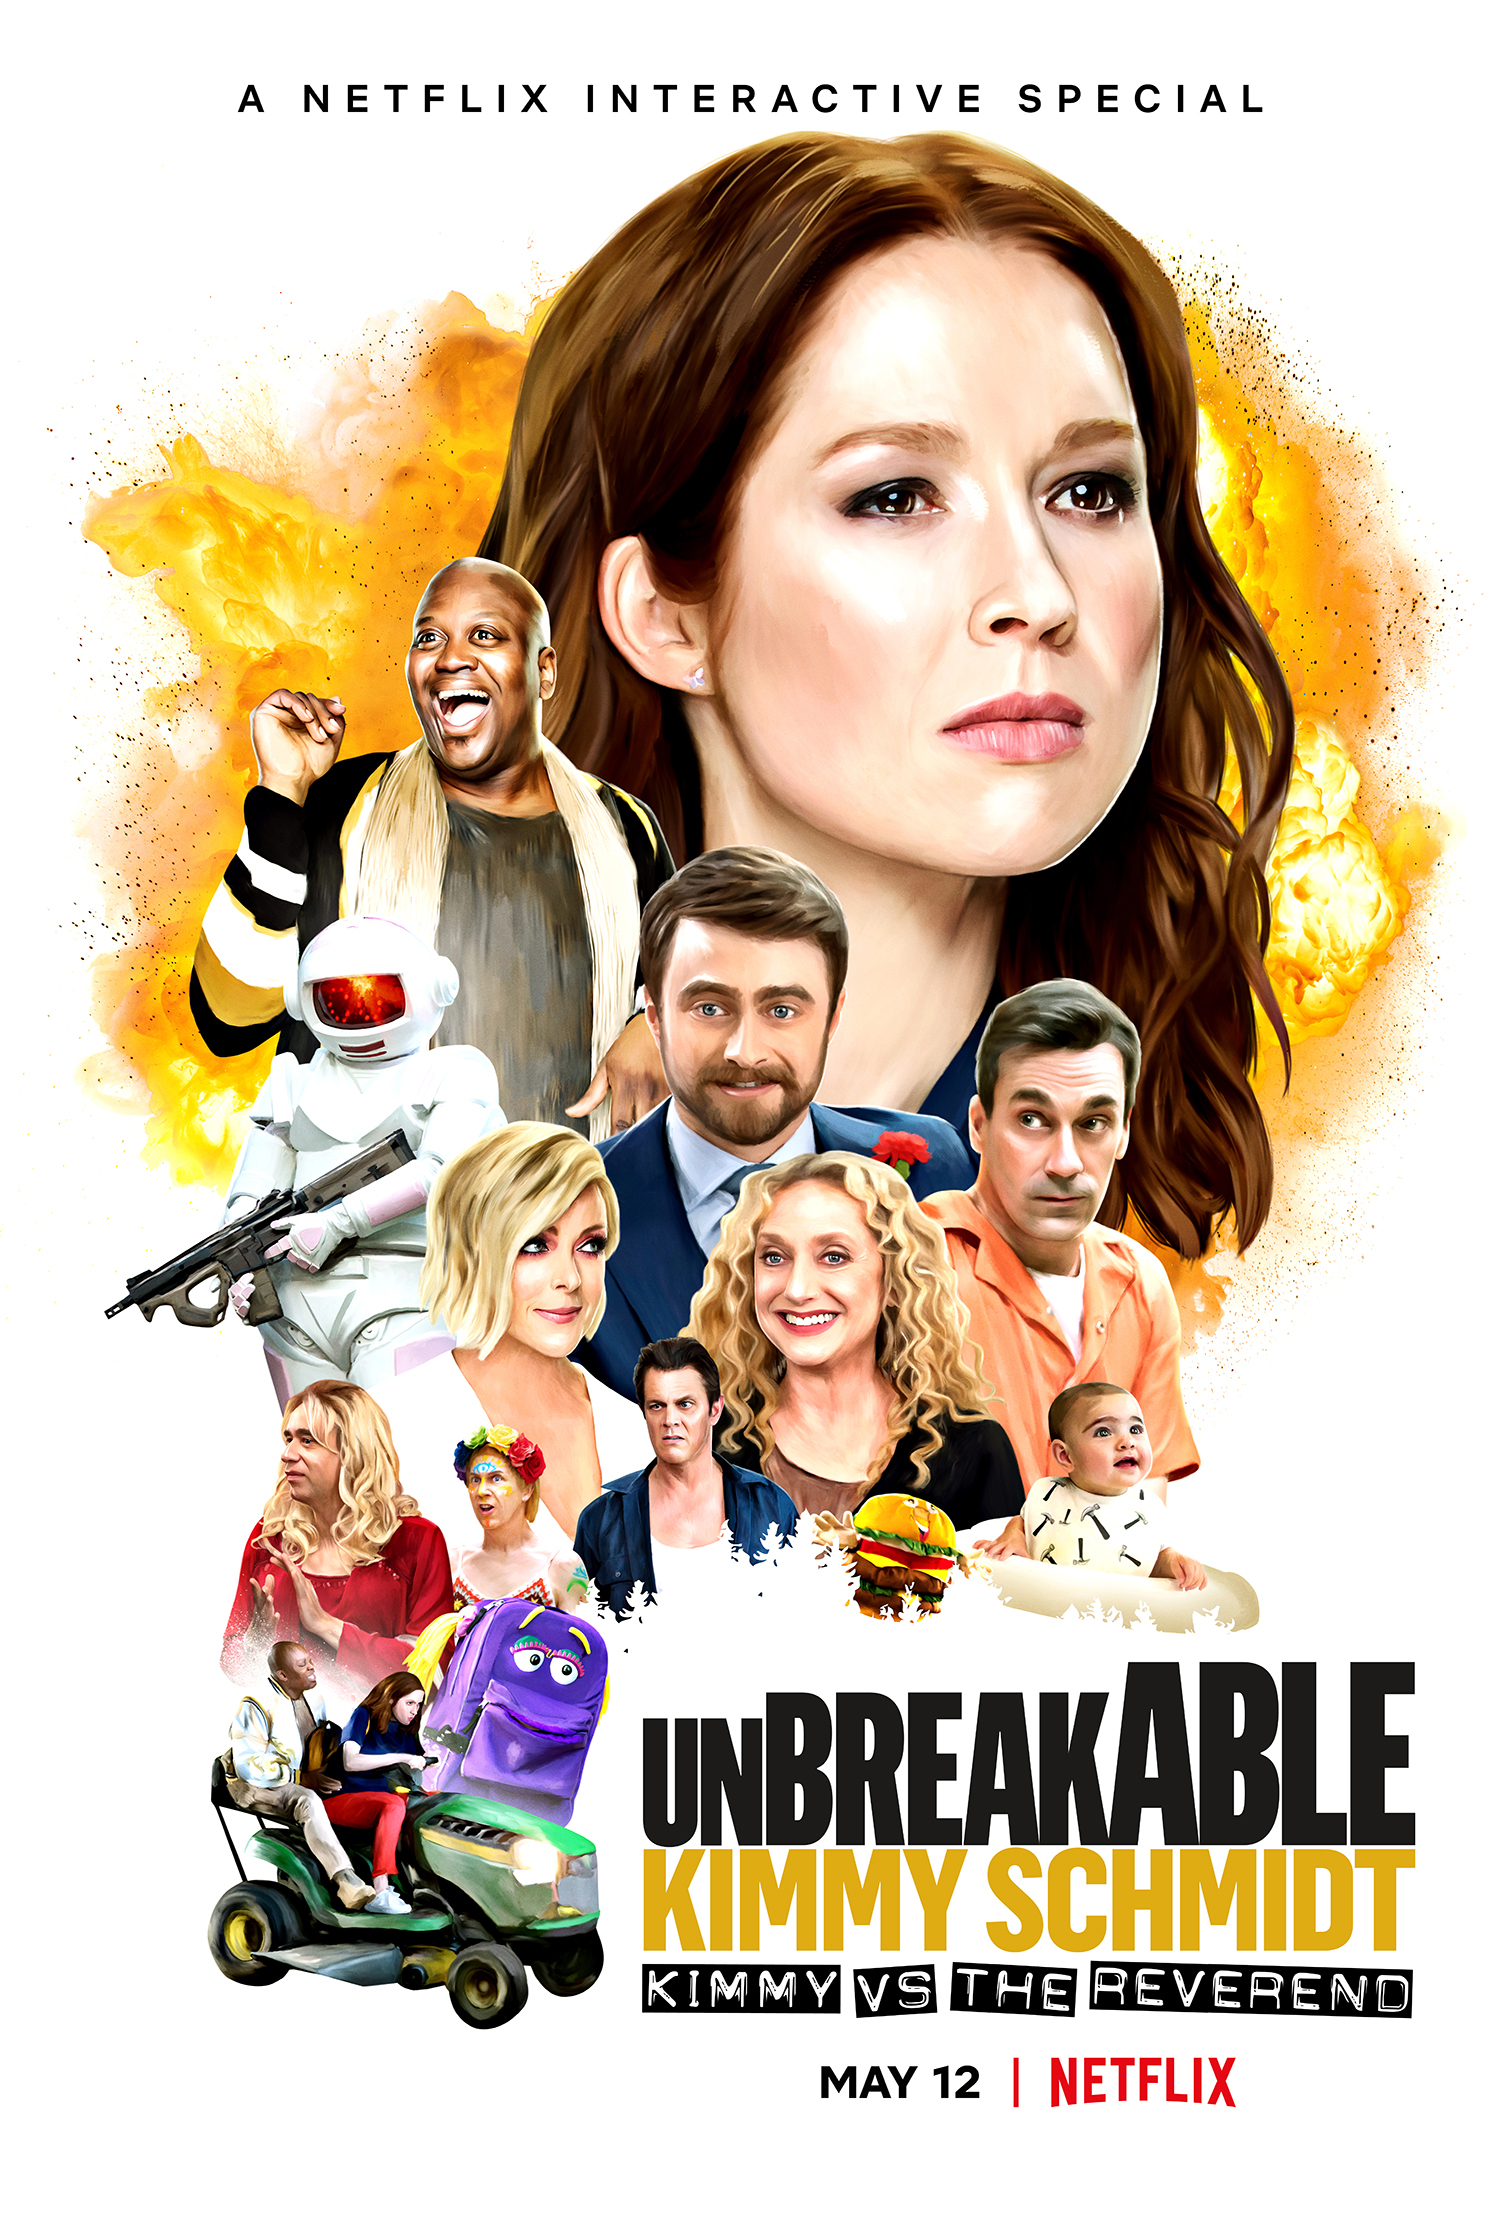 New Show: Netflix’s Unbreakable Kimmy Schmidt Starring Ellie Kemper